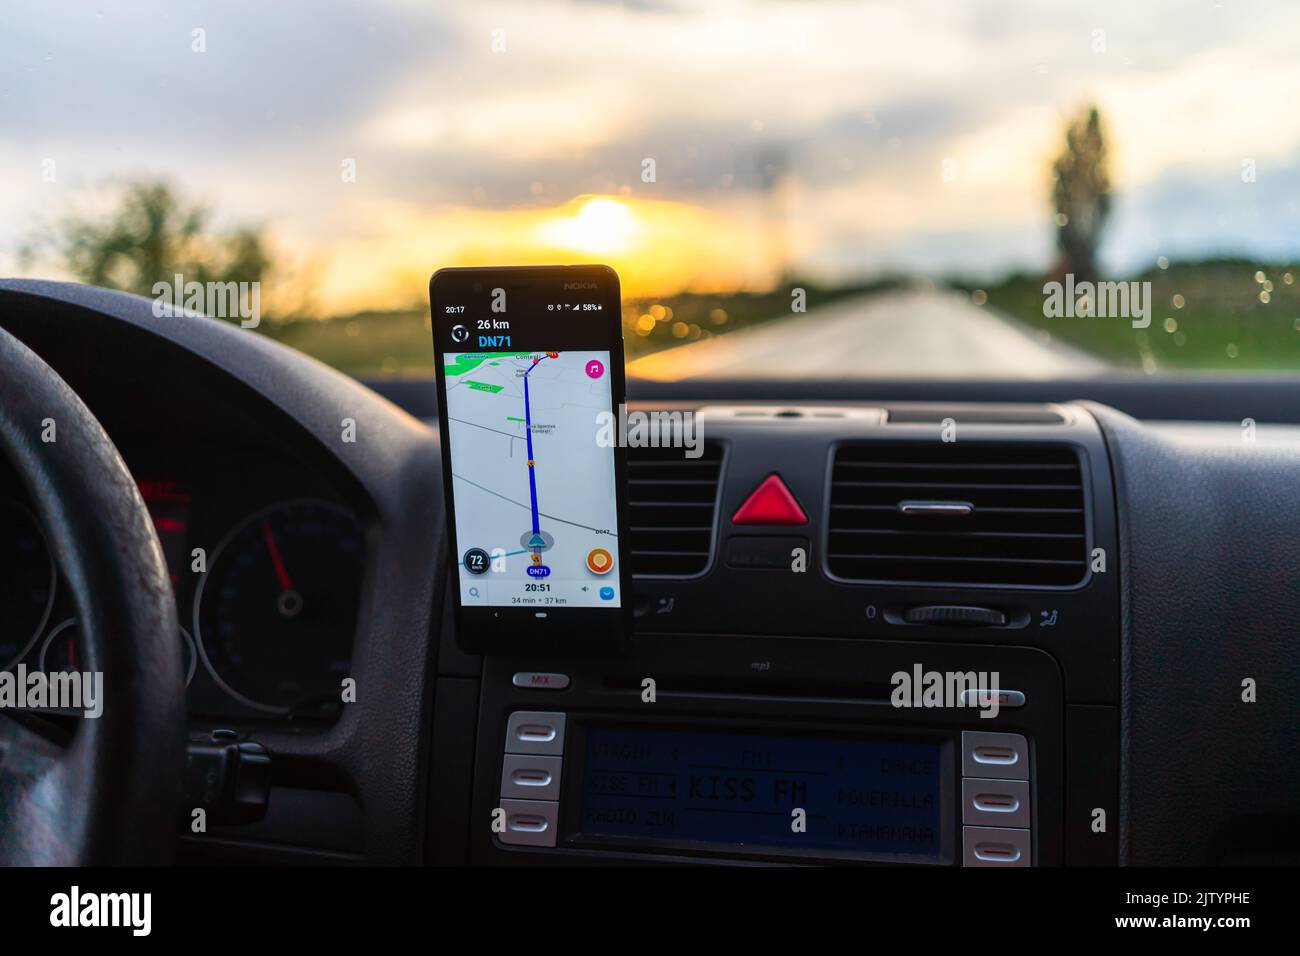 Using Waze Maps Application On Smartphone On Car Dashboard Bucharest Romania 2022 2JTYPHE 